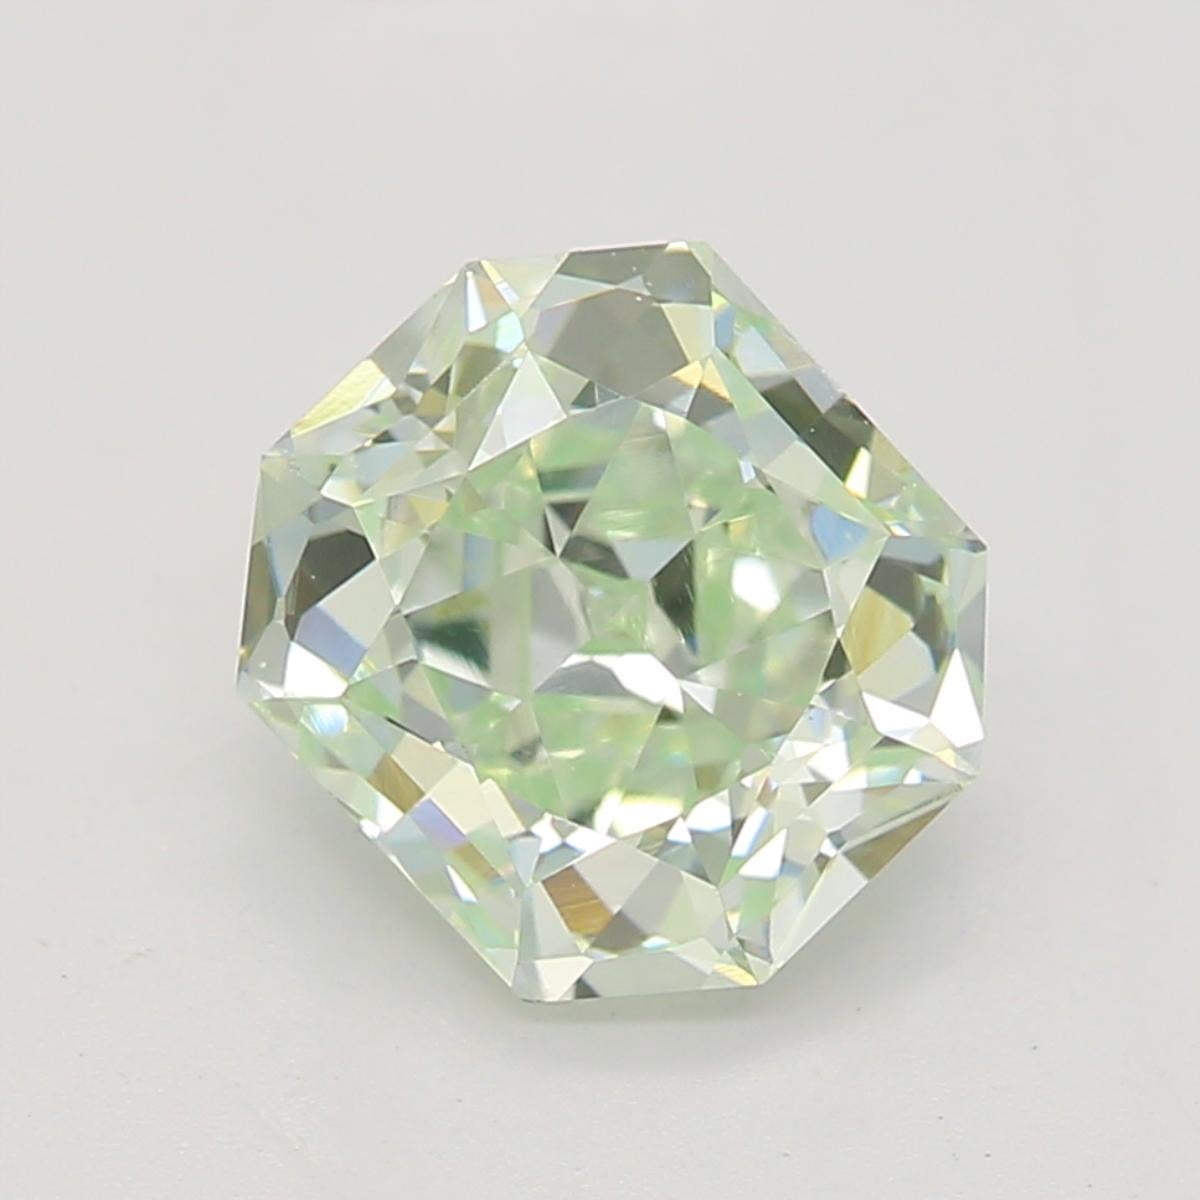 Radiant Cut 0.92 Carat Fancy Light Bluish Green Radiant Diamond VS1 Clarity GIA Certified For Sale